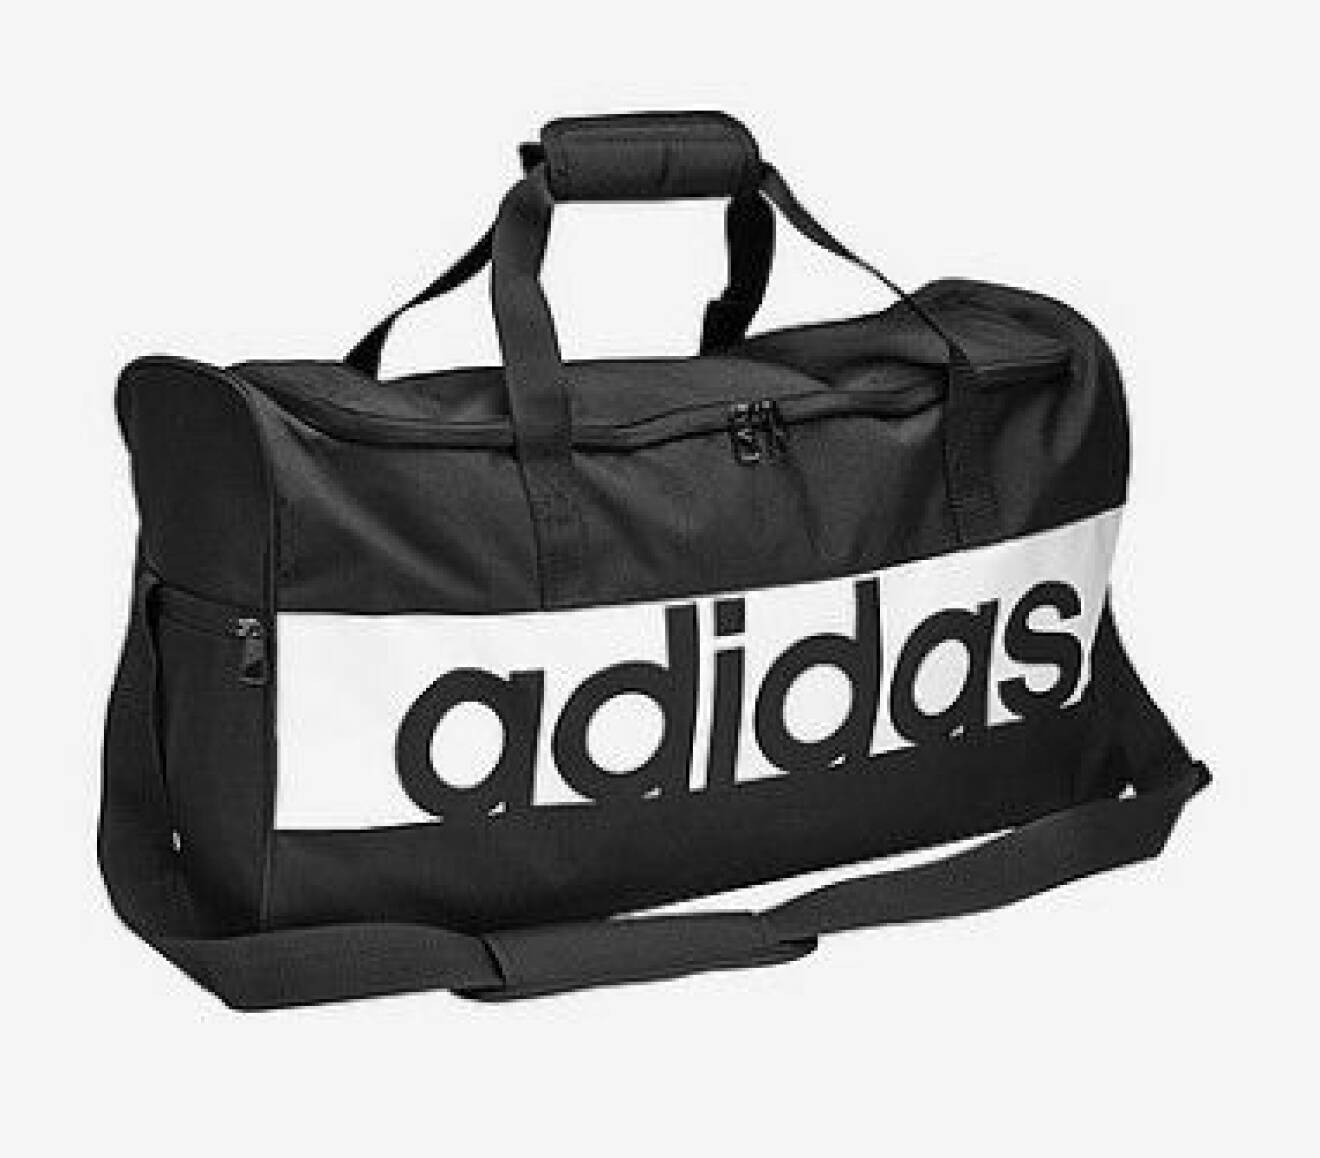 Sportbag från Adidas.